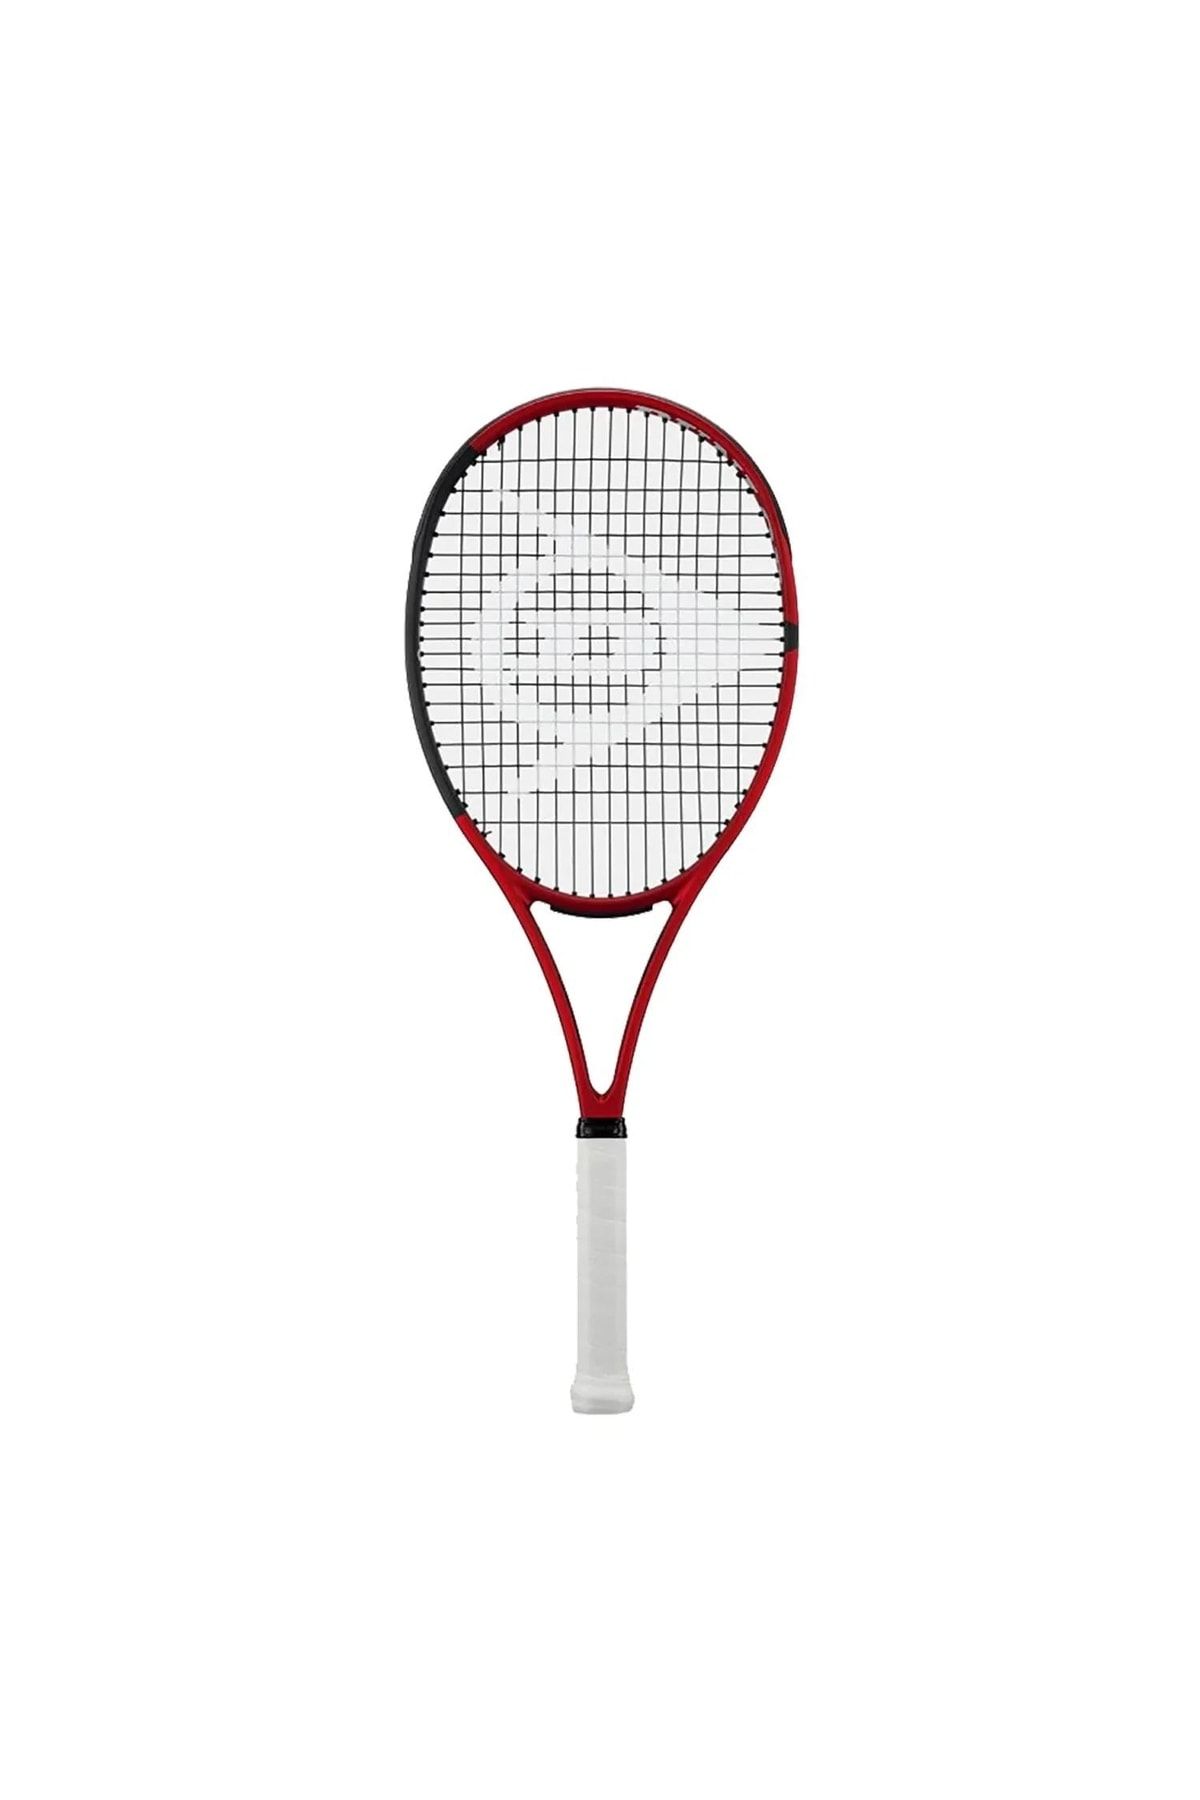 Dunlop Cx 200 Tenis Raketi